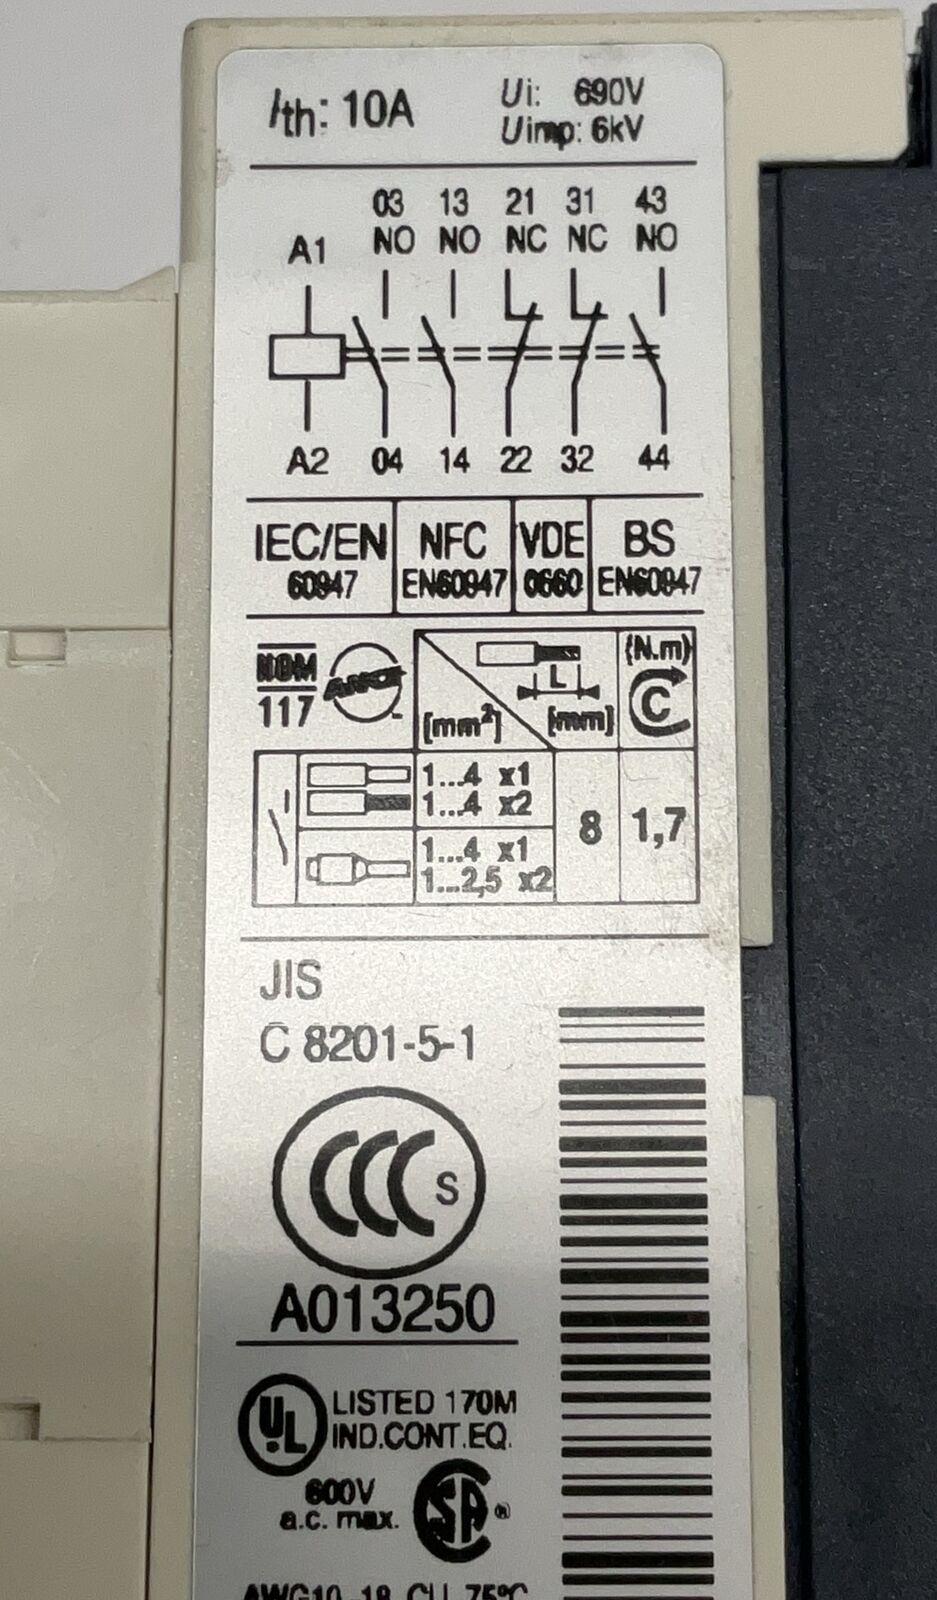 Schneider Electric Telemecanique CAD32BD 24VDC Control Relay (RE251)